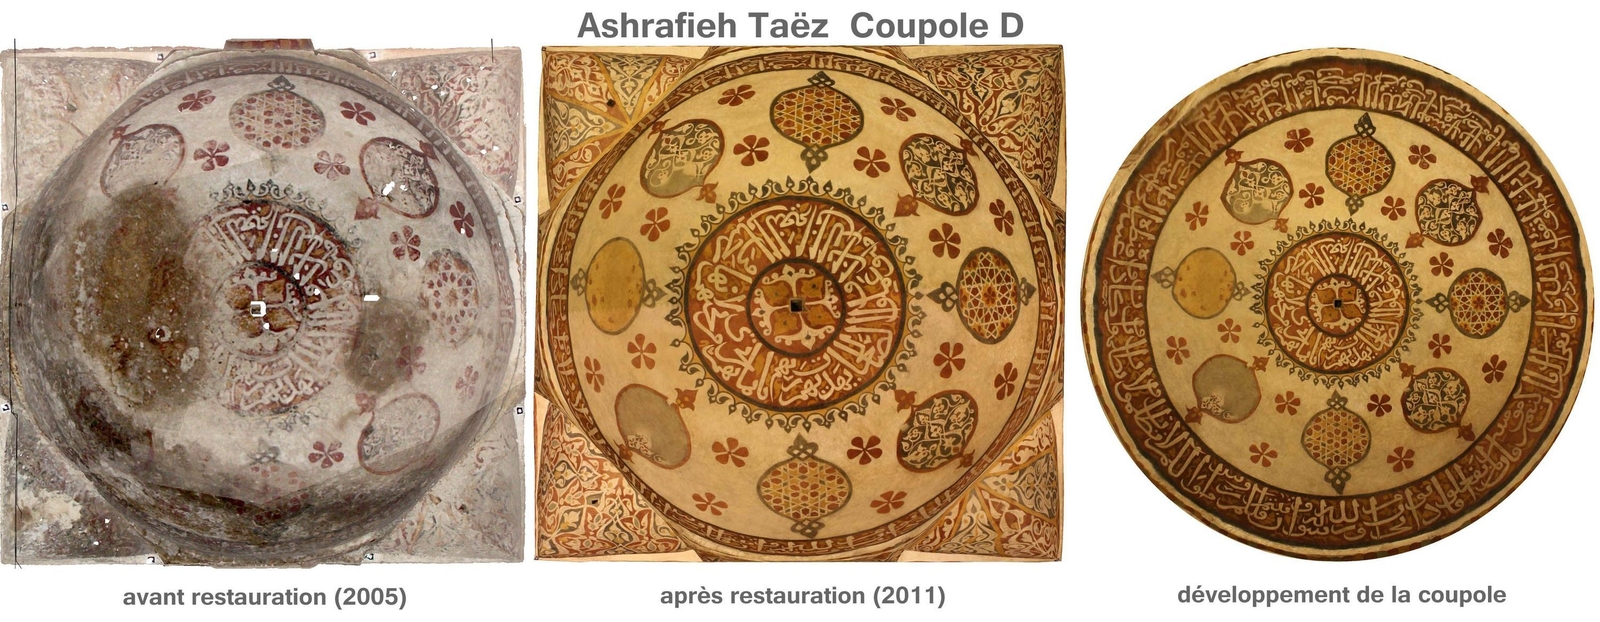 Coupole D restaurée de la mosquée et madrasa al-Ashrafiyya, Taʿizz